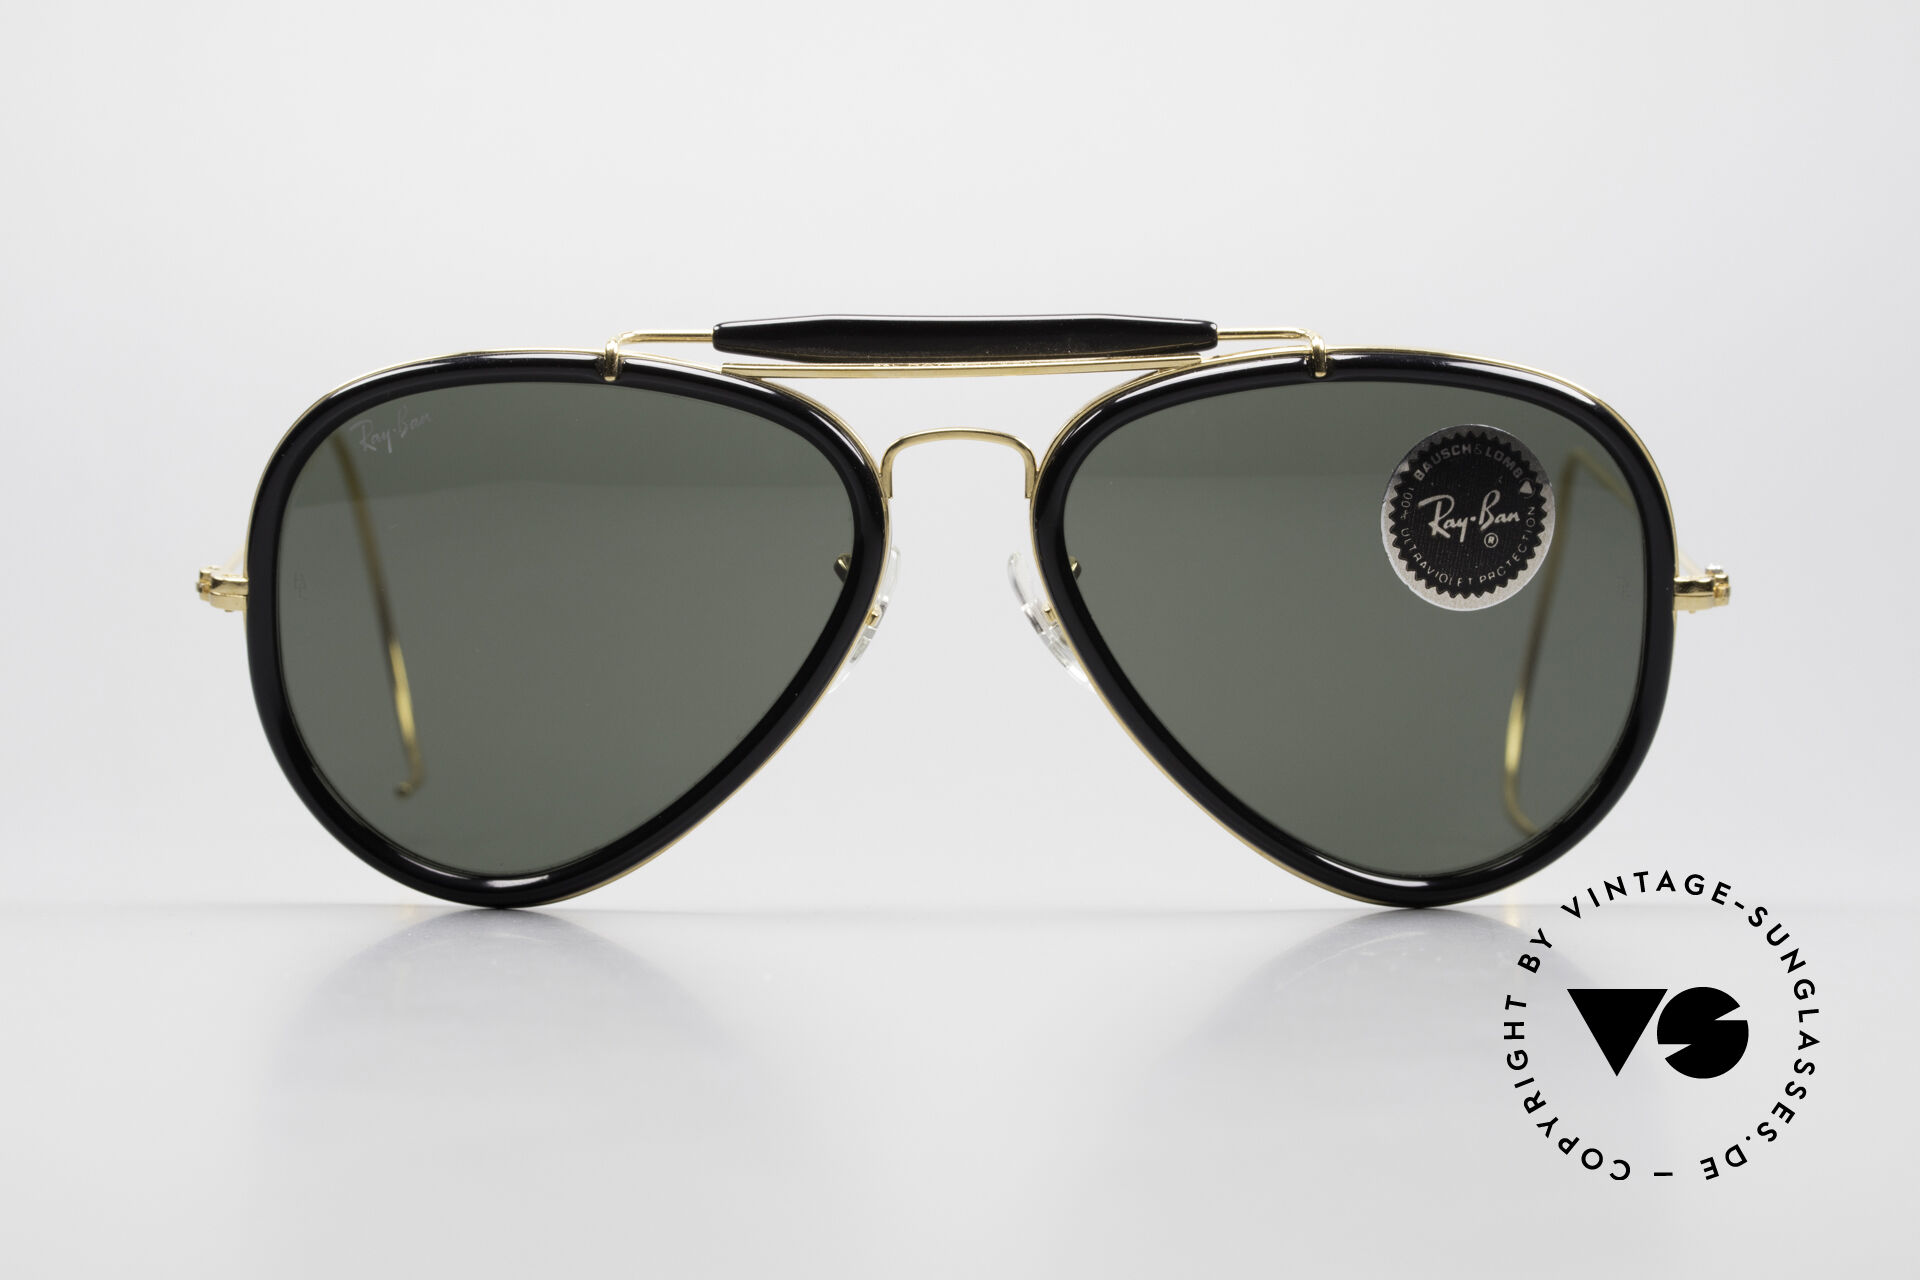 Sunglasses Ray Ban Traditionals Outdoorsman B&L USA Aviator Shades 80s